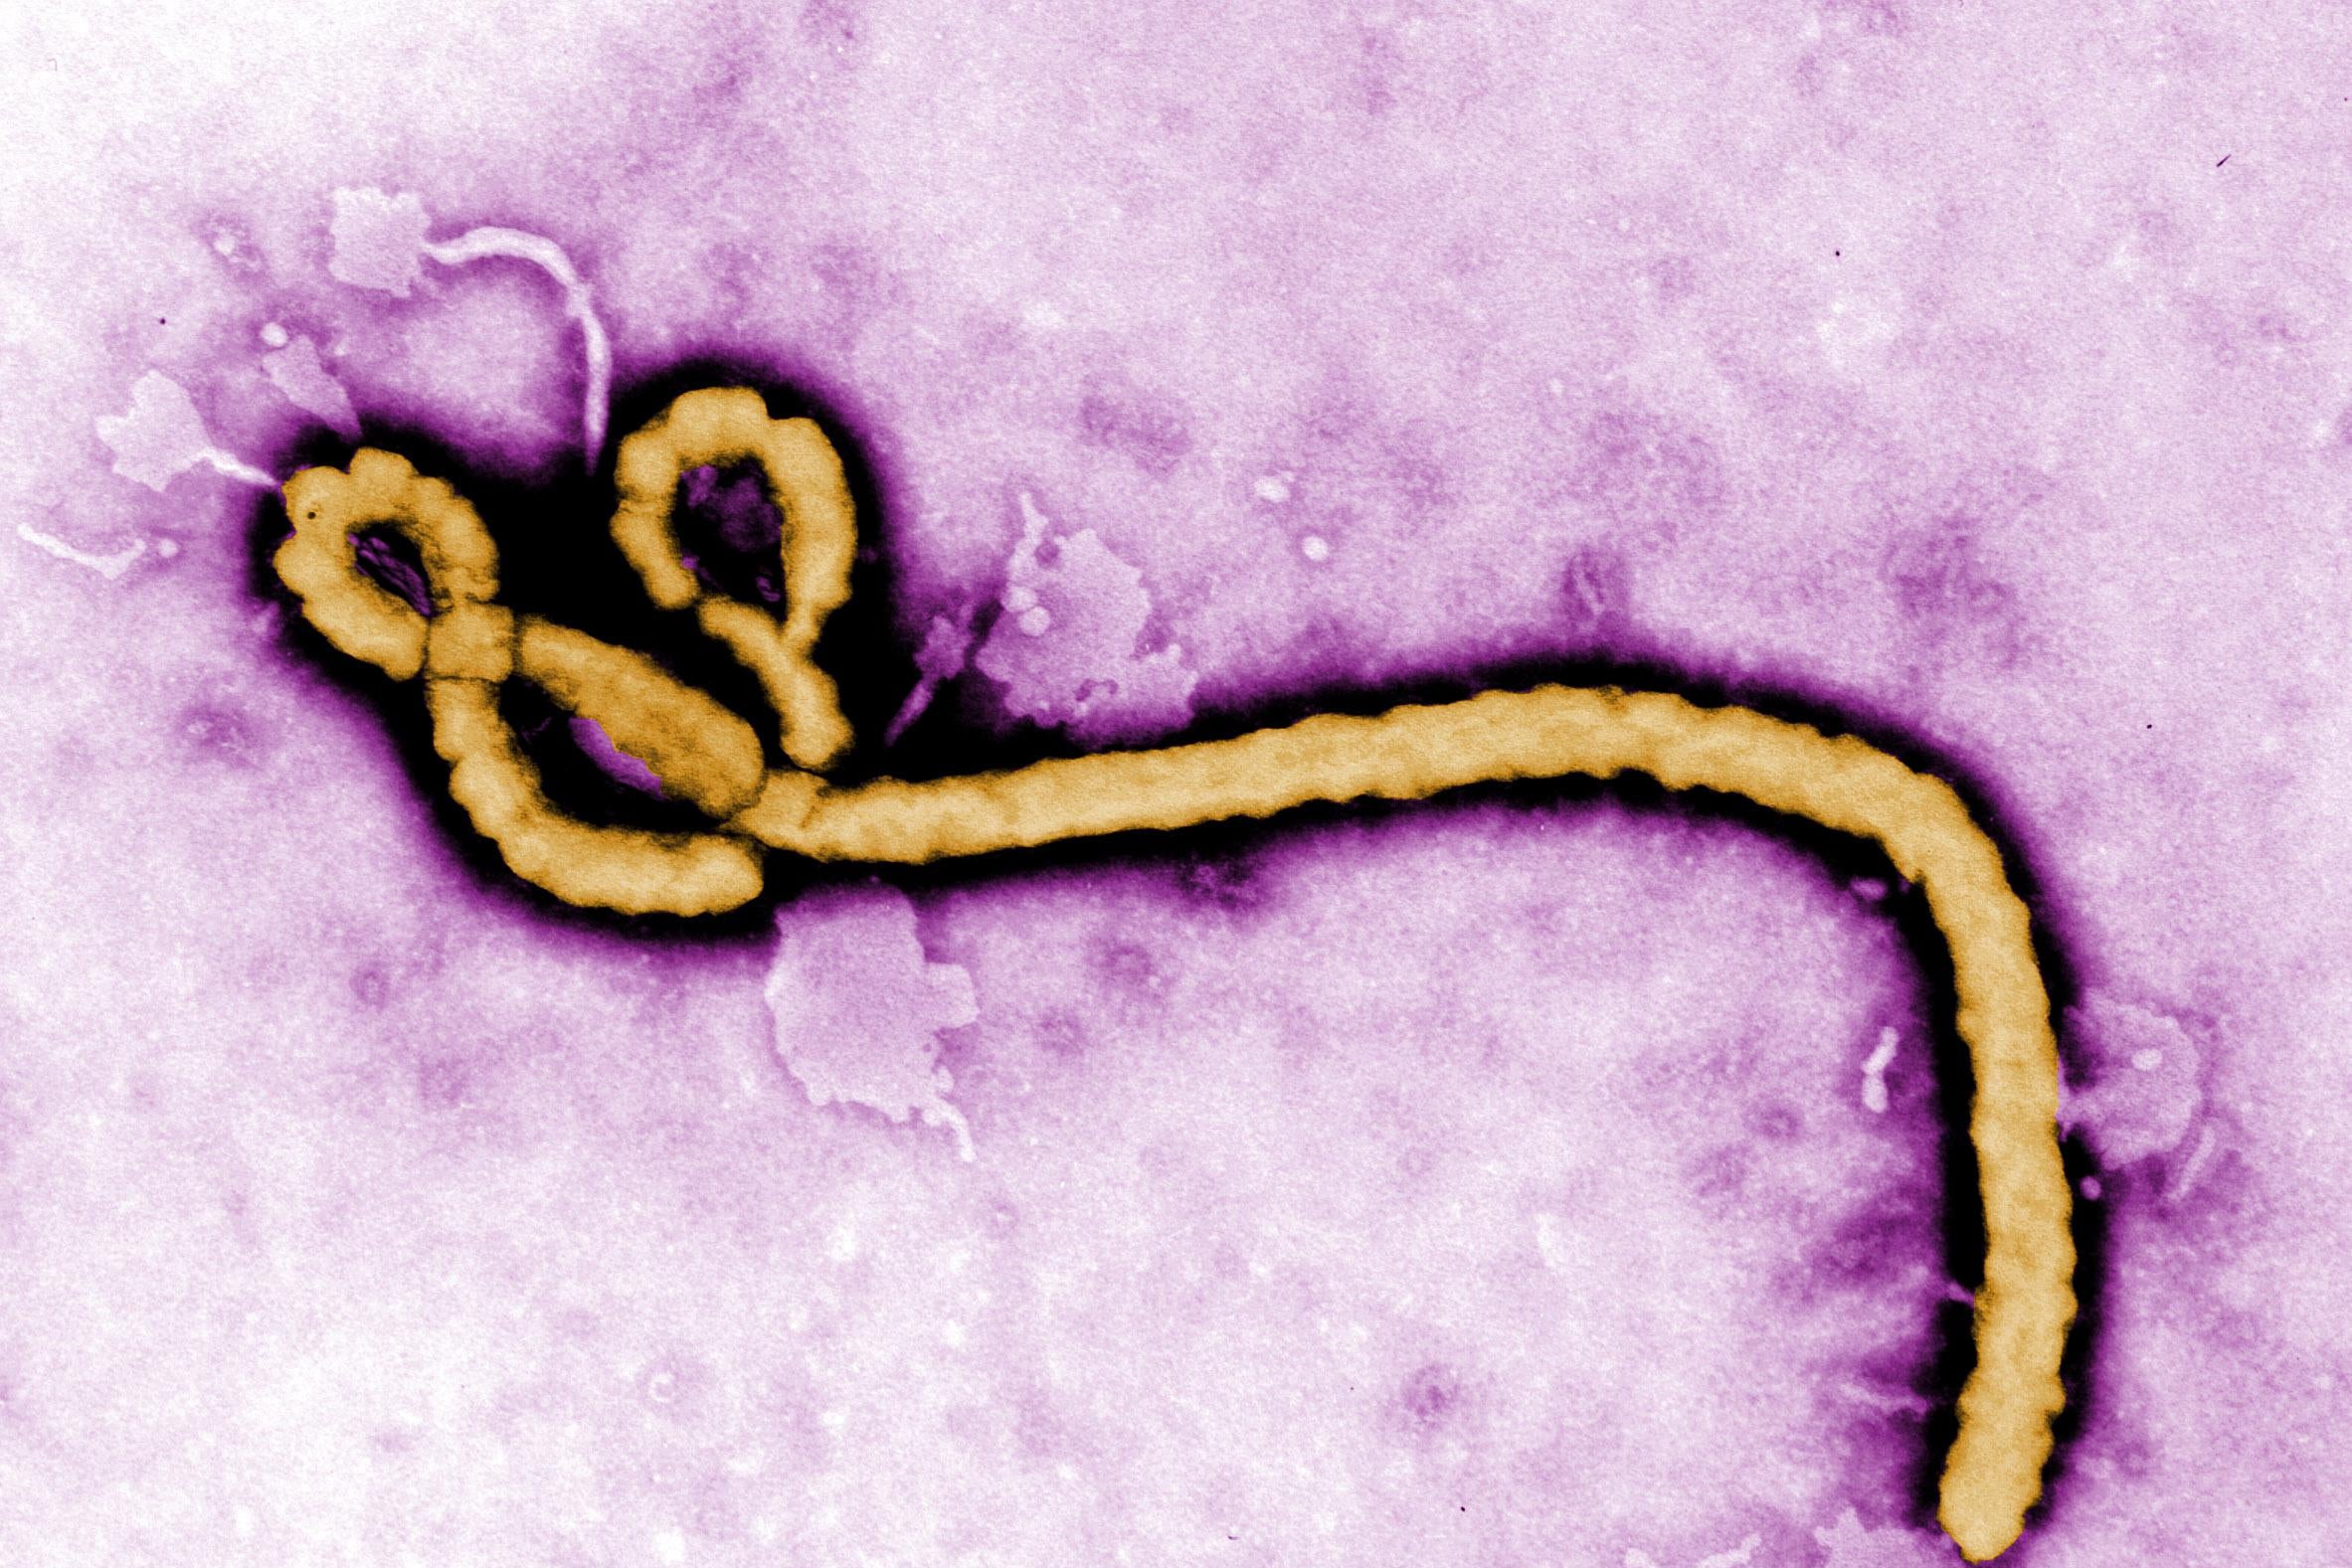 A micrograph of an Ebola virus